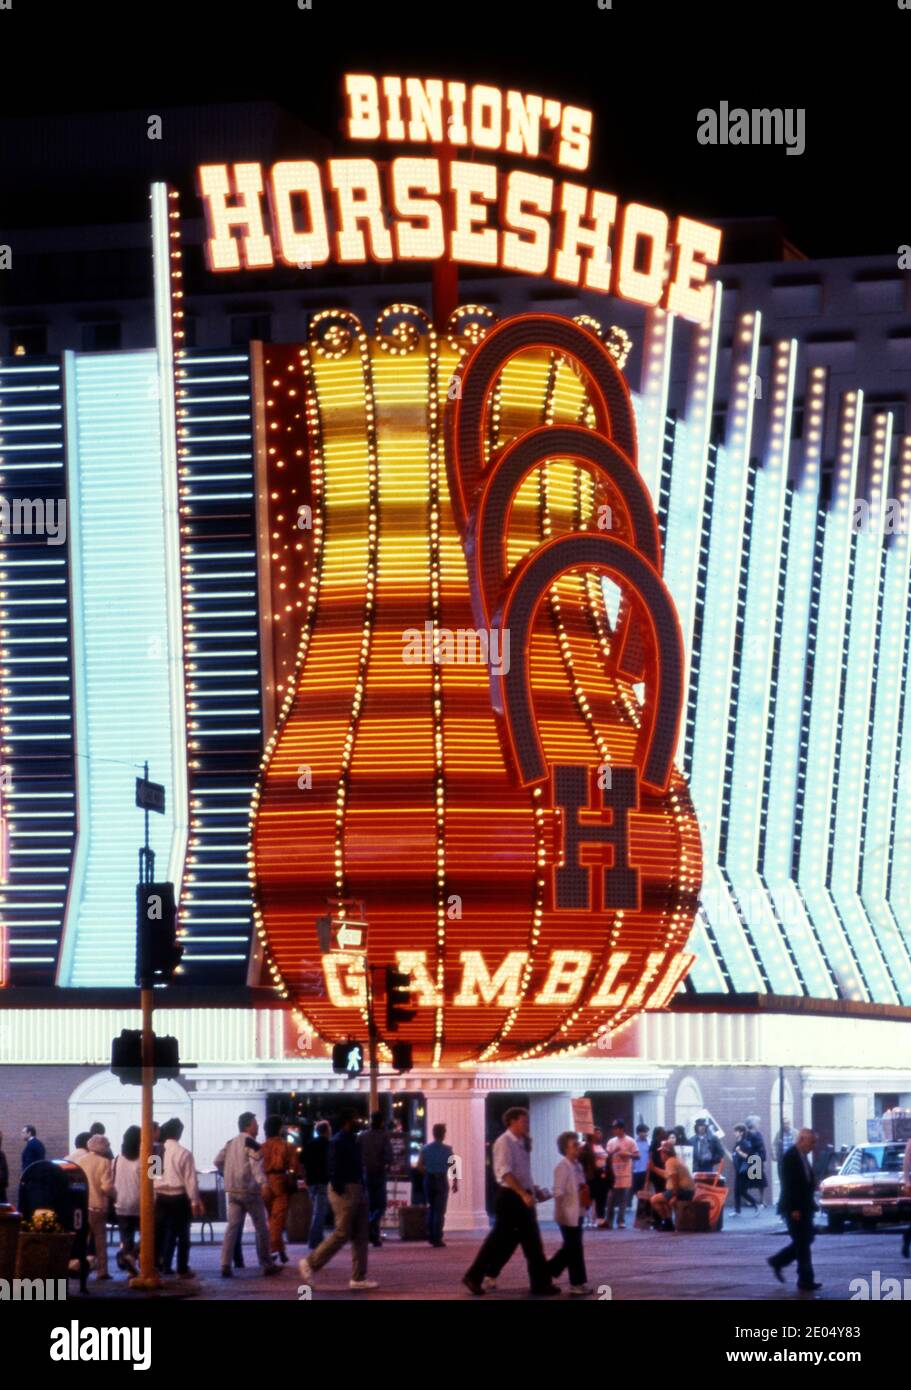 Binion's Horseshoe Casino at night on Fremont street in Downtown Las Vegas, Nevada circa 1970s Stock Photo